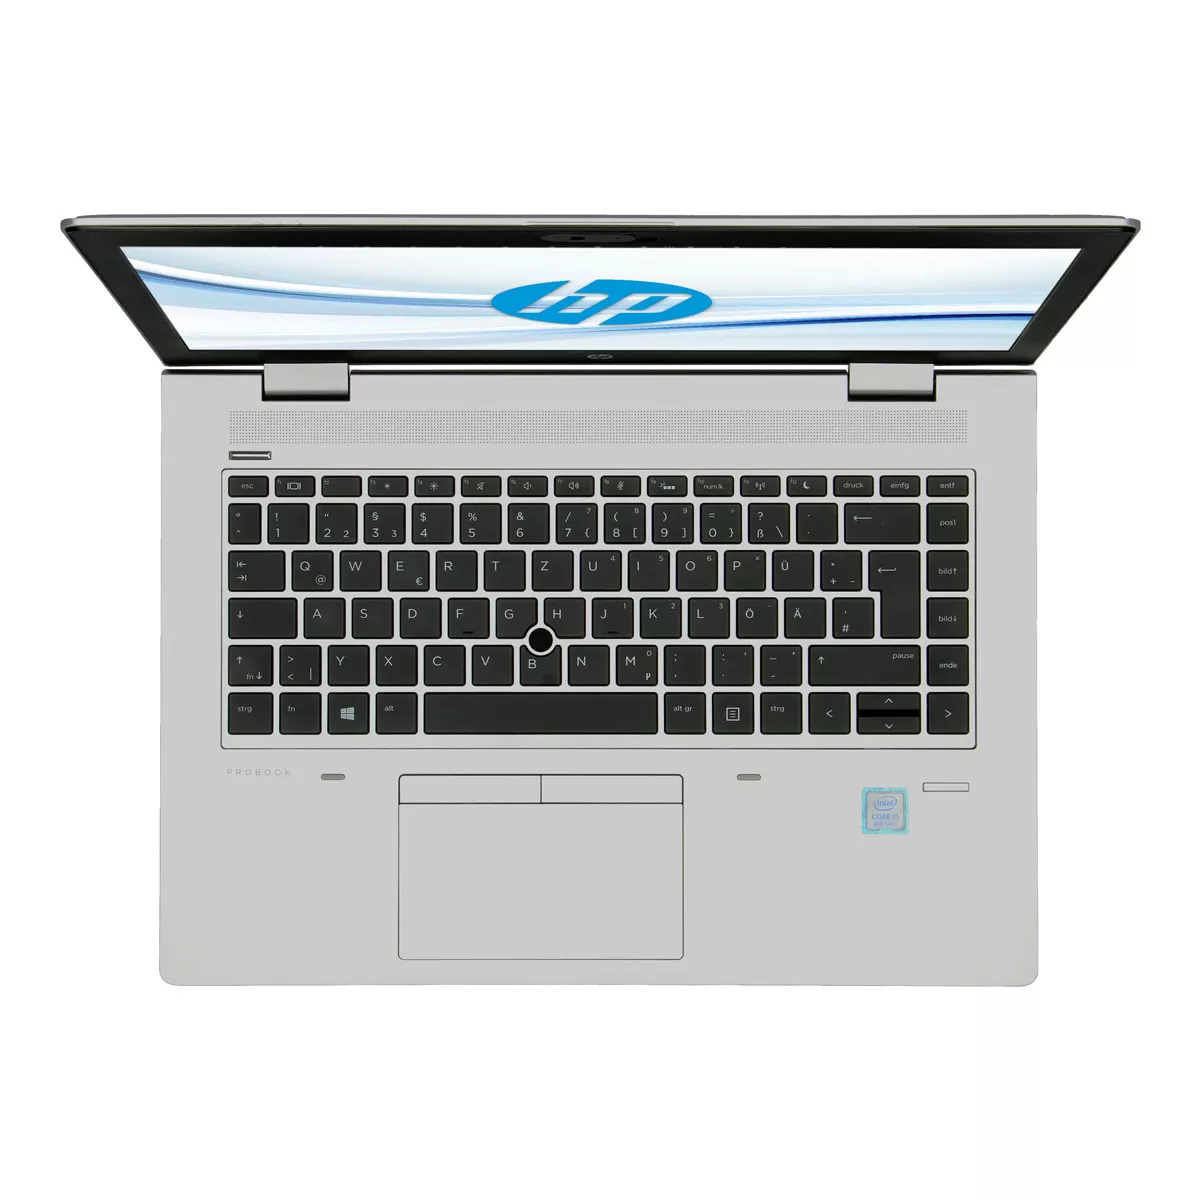 HP ProBook 640 G4 Core i7 8650U Full-HD 240 GB M.2 SSD Webcam A